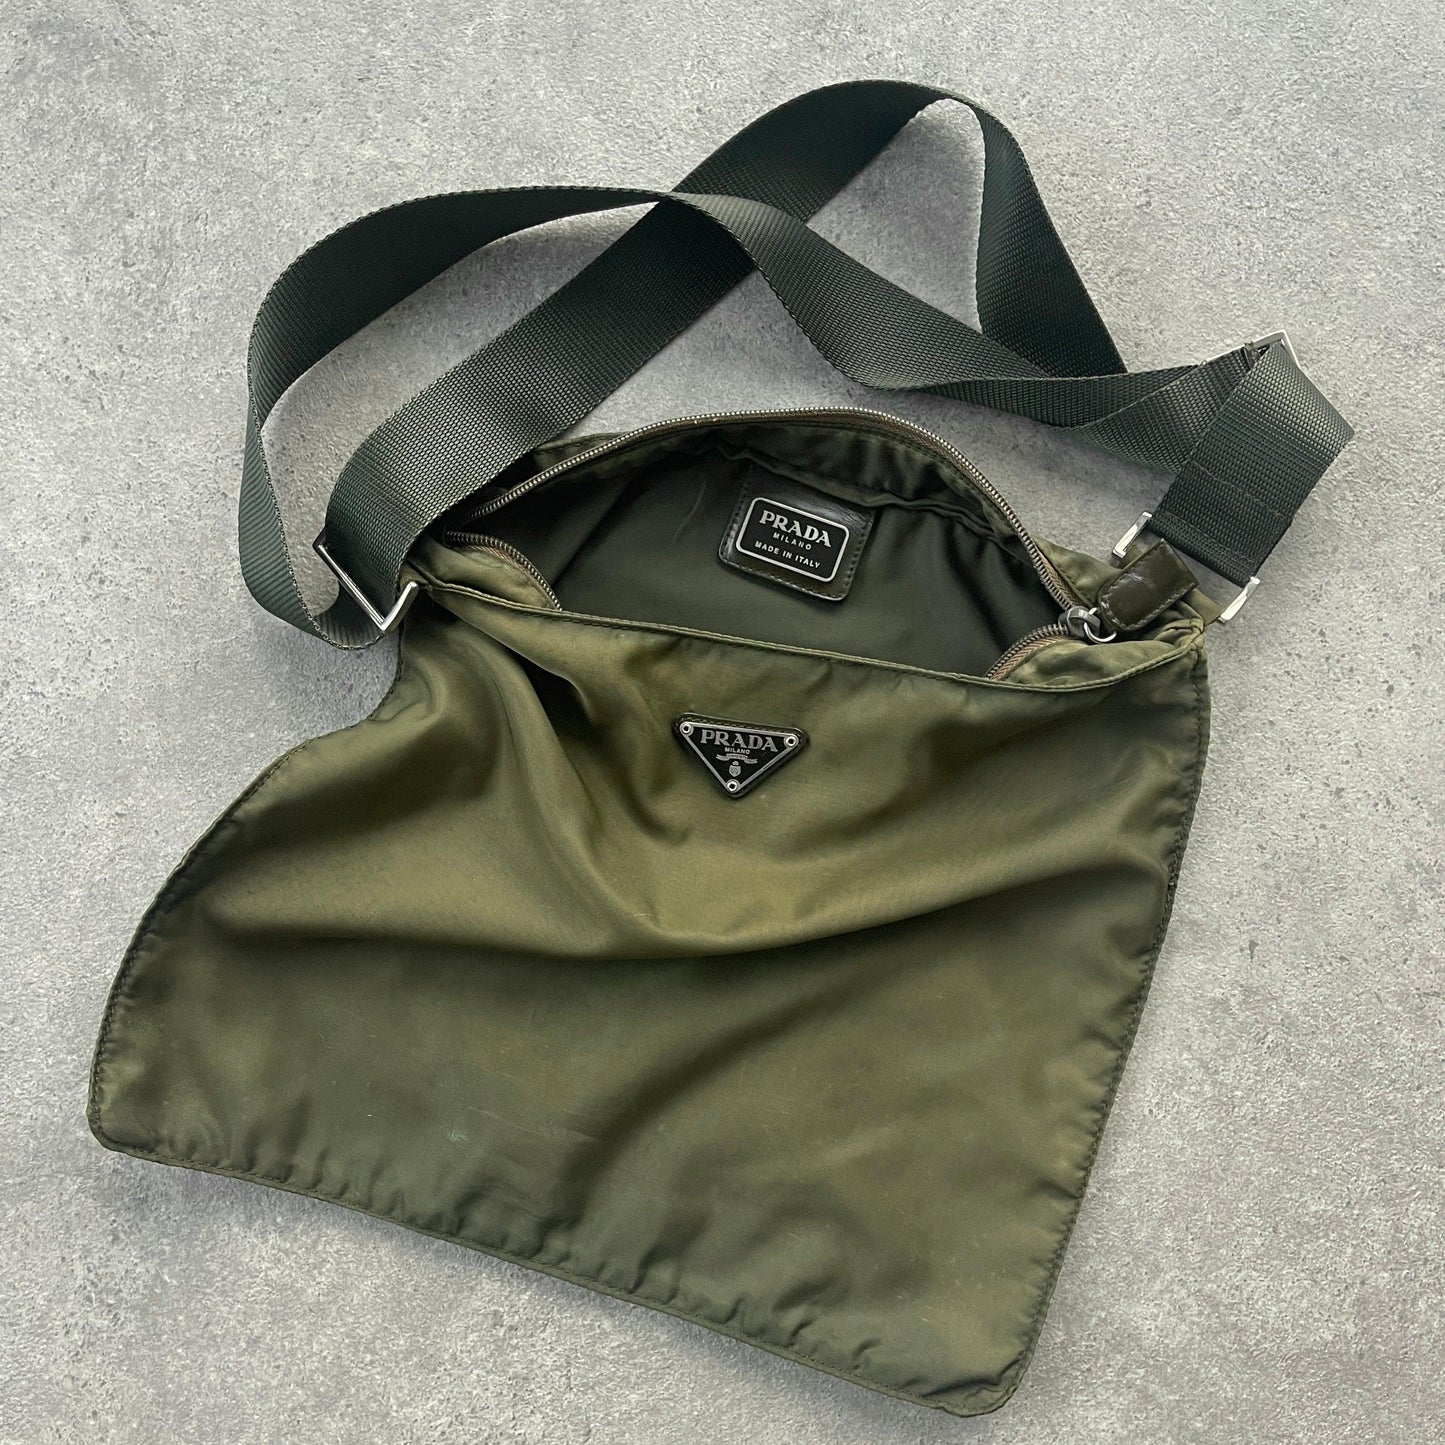 Prada Milano 2000s cross body sling bag (13”x12”) - Known Source